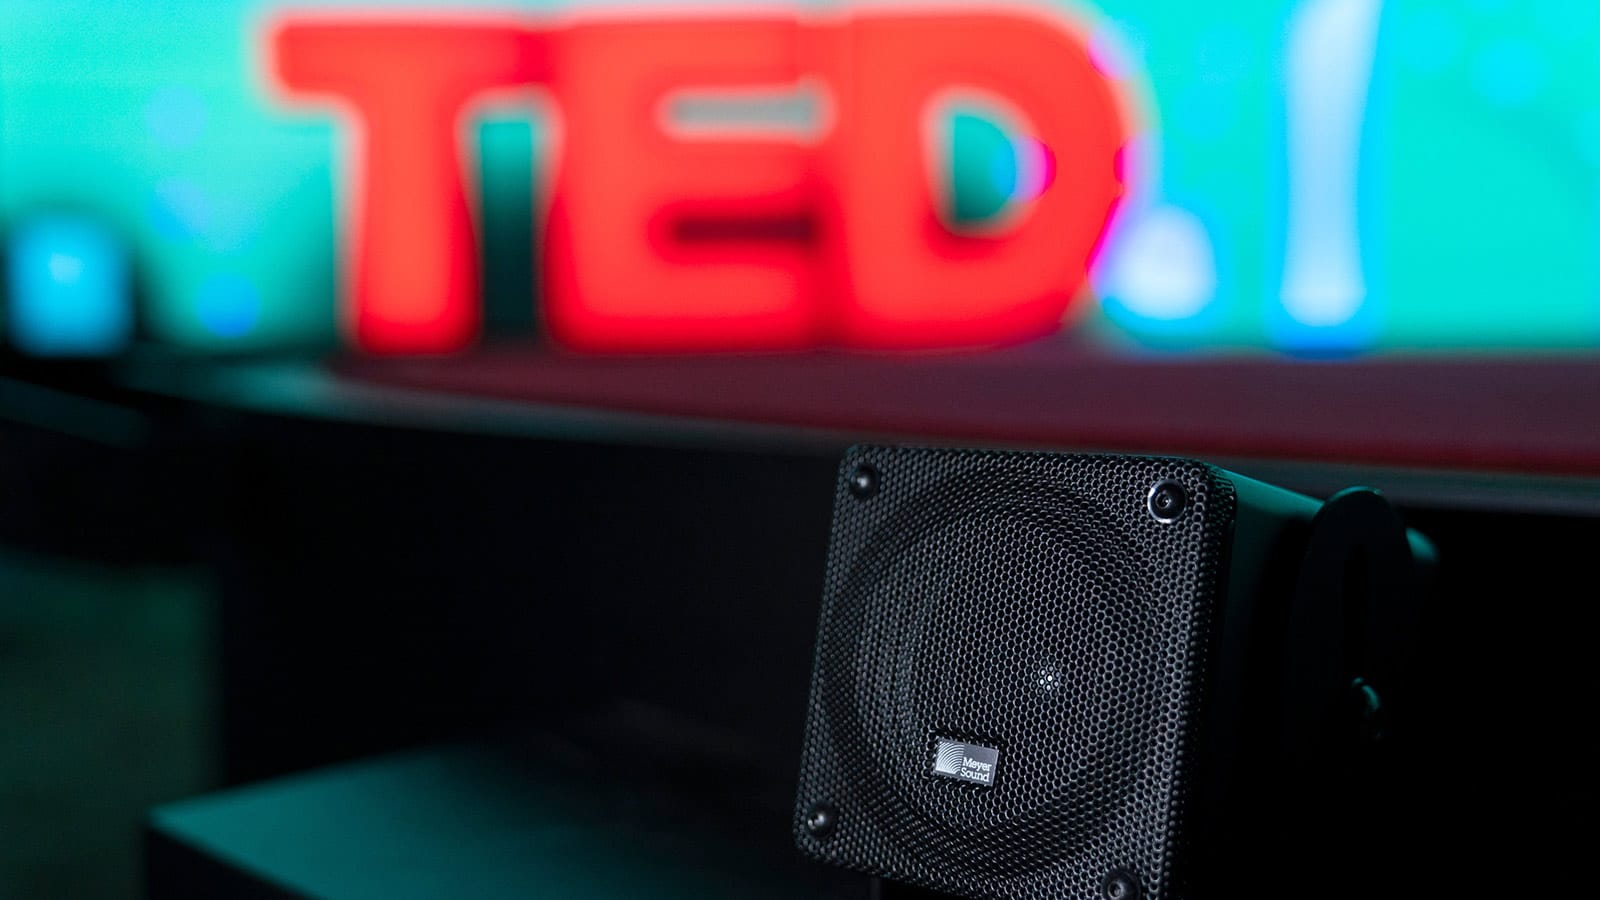 TED2019: Bigger Than Us. April 15 - 19, 2019, Vancouver, BC, Canada.